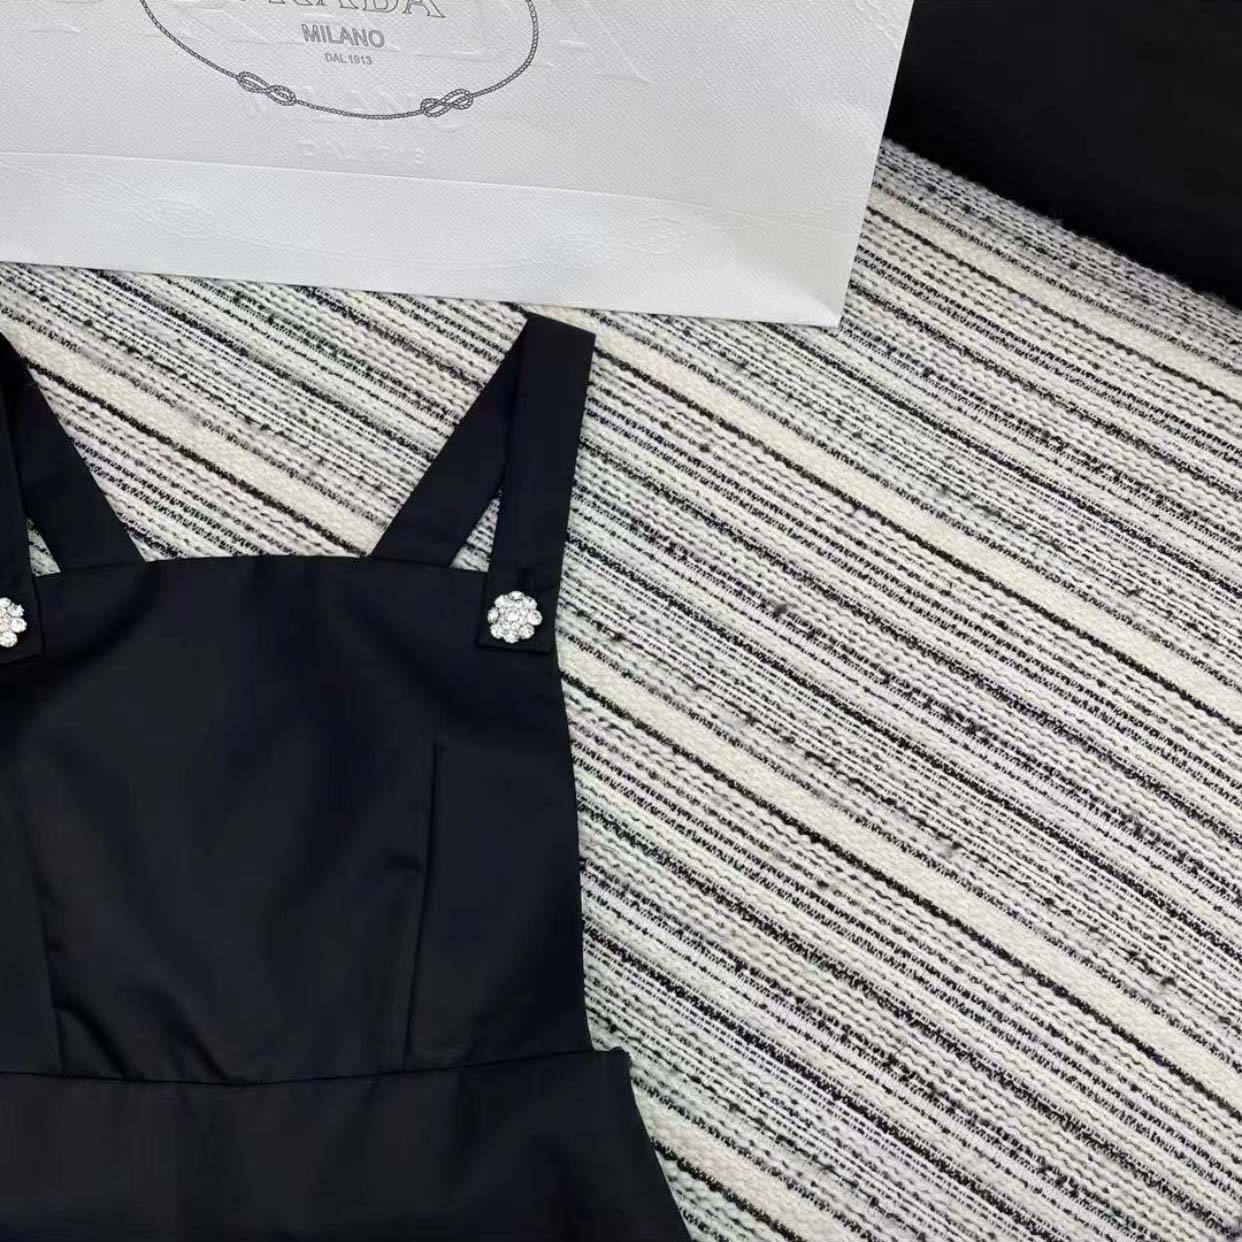 Prada Women Re-Nylon Overall Dress-Black